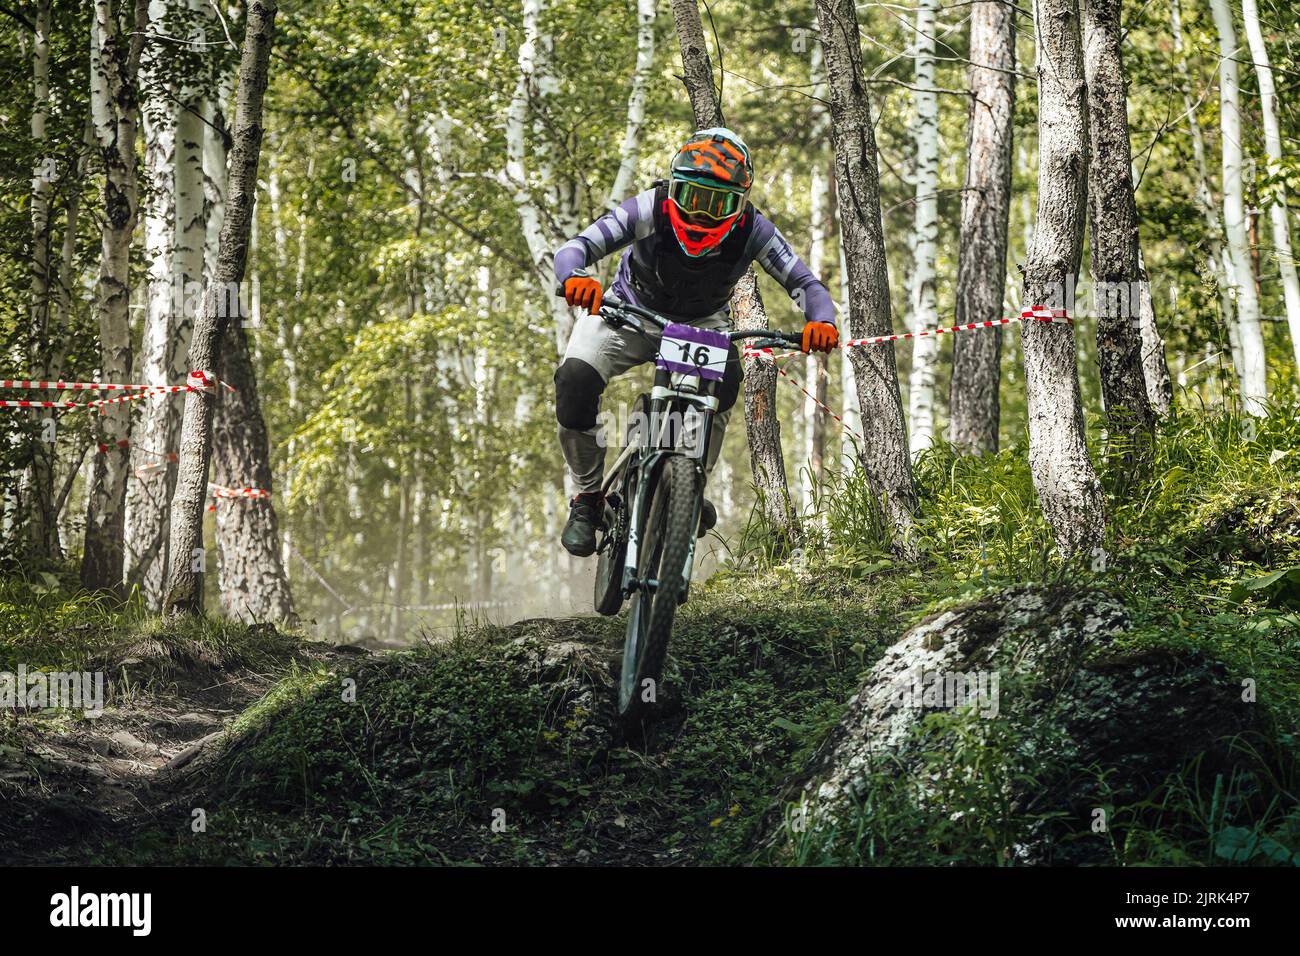 atleta rider in pista forestale in discesa Foto Stock